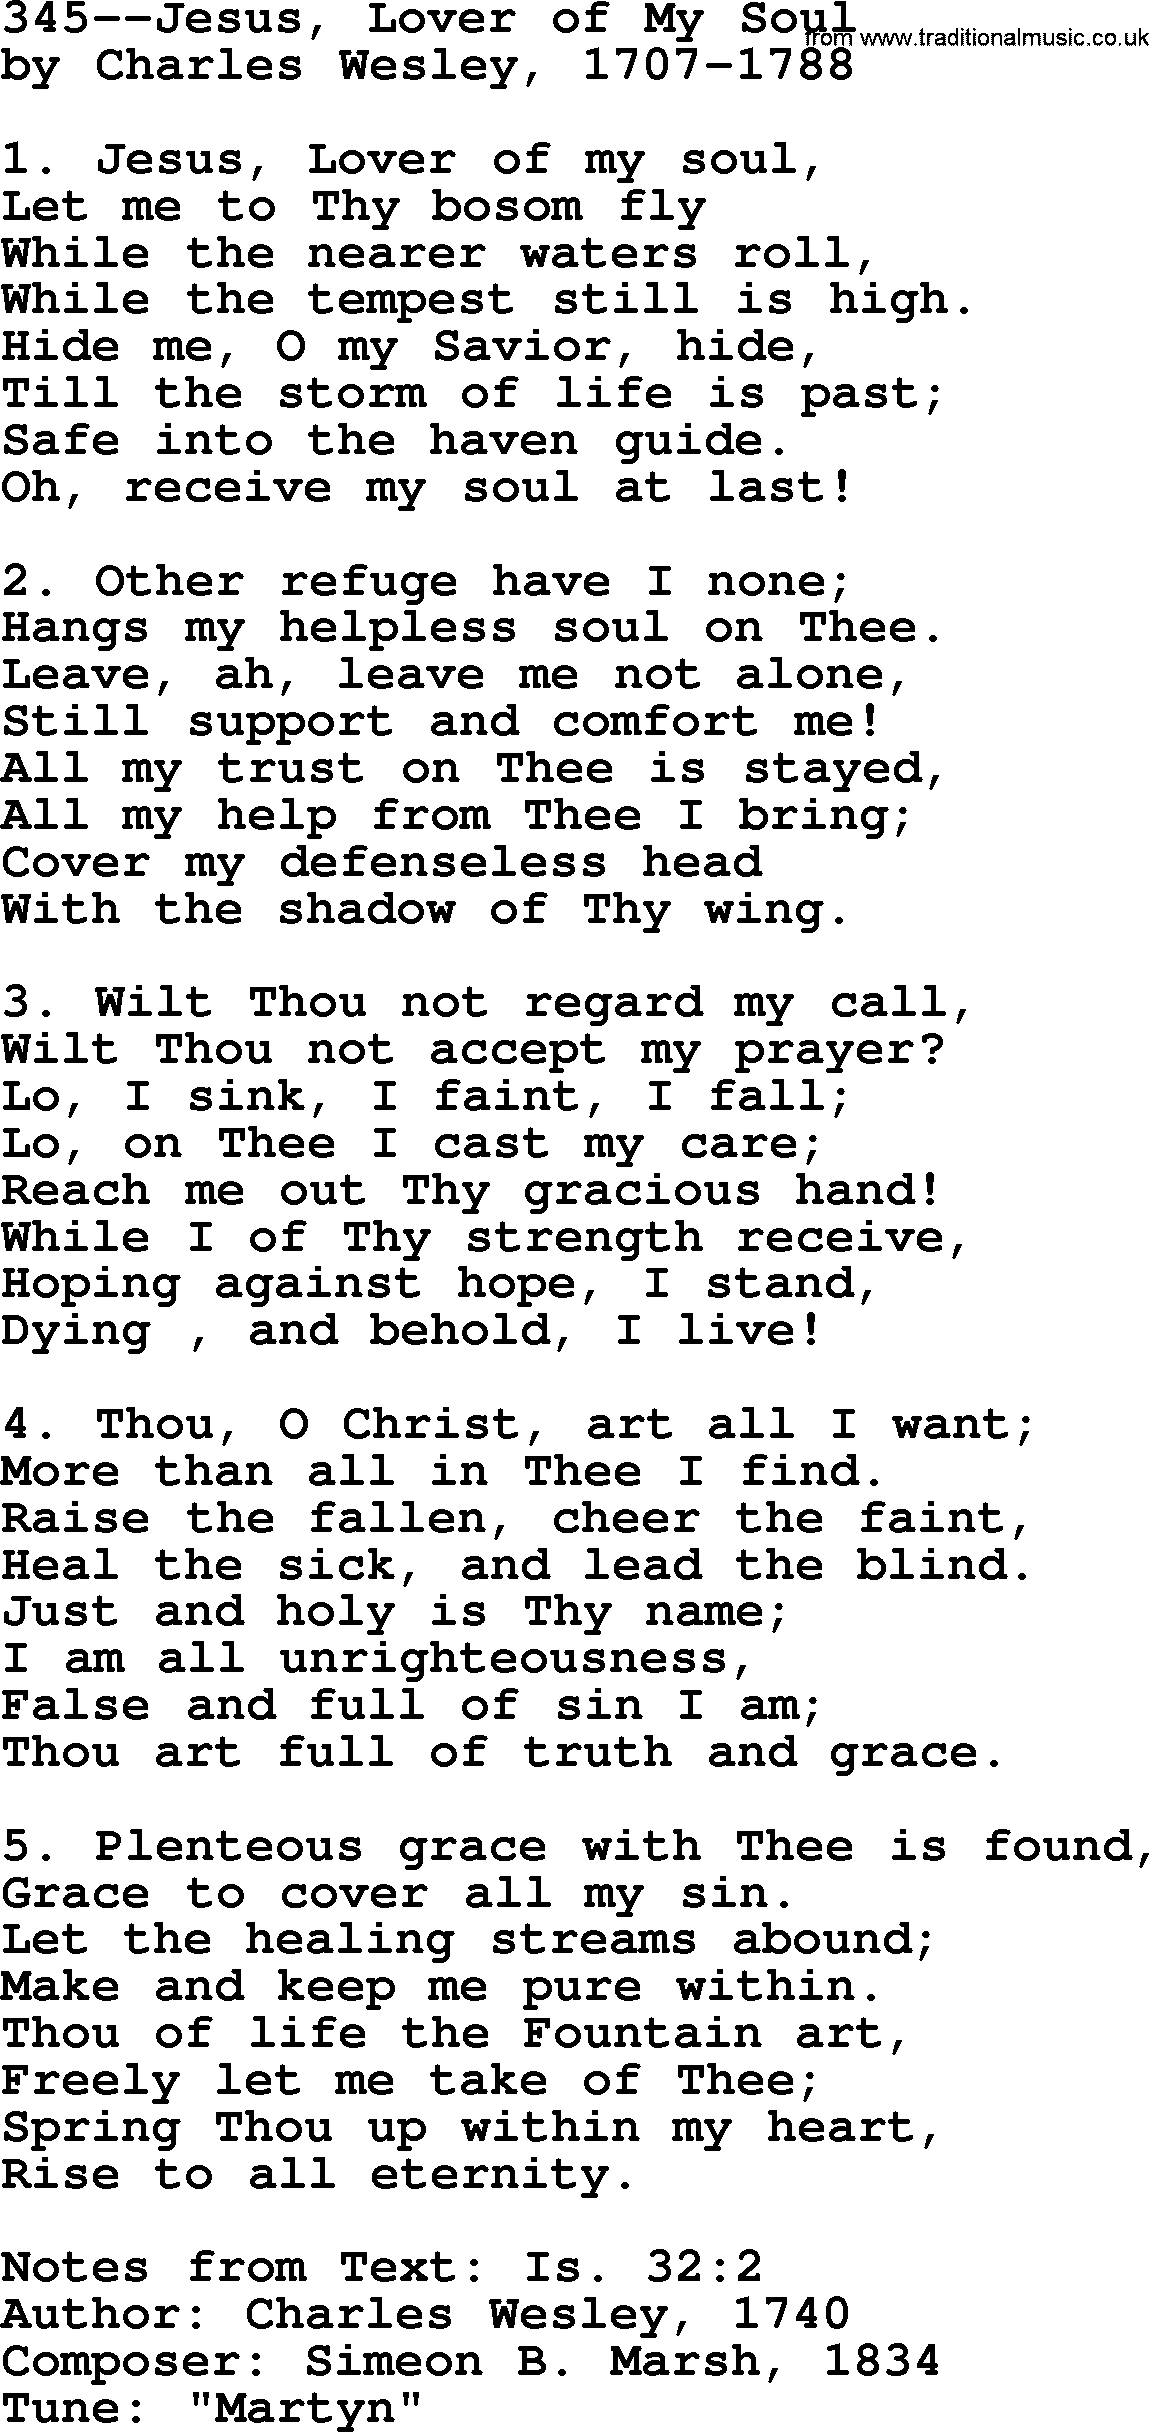 Lutheran Hymn: 345--Jesus, Lover of My Soul.txt lyrics with PDF